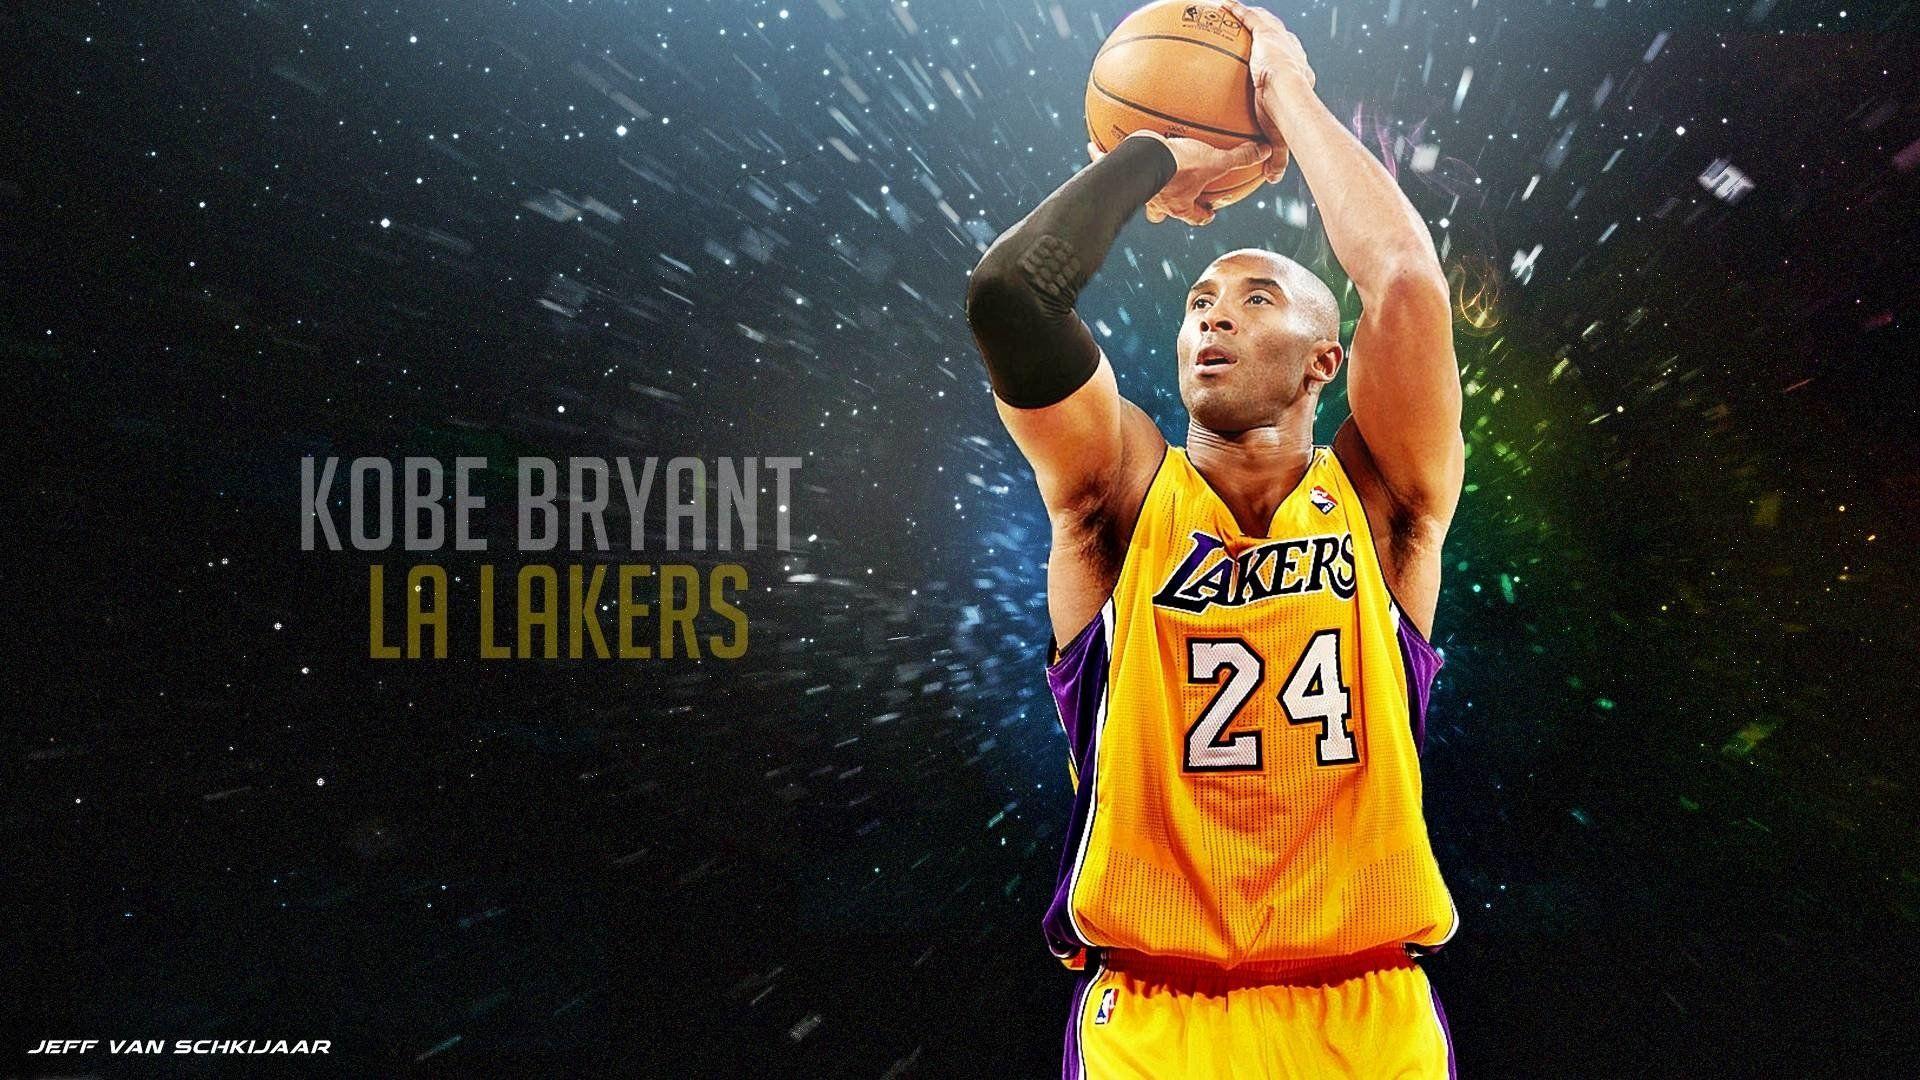 Kobe Bryant HD Wallpaper and Background Image